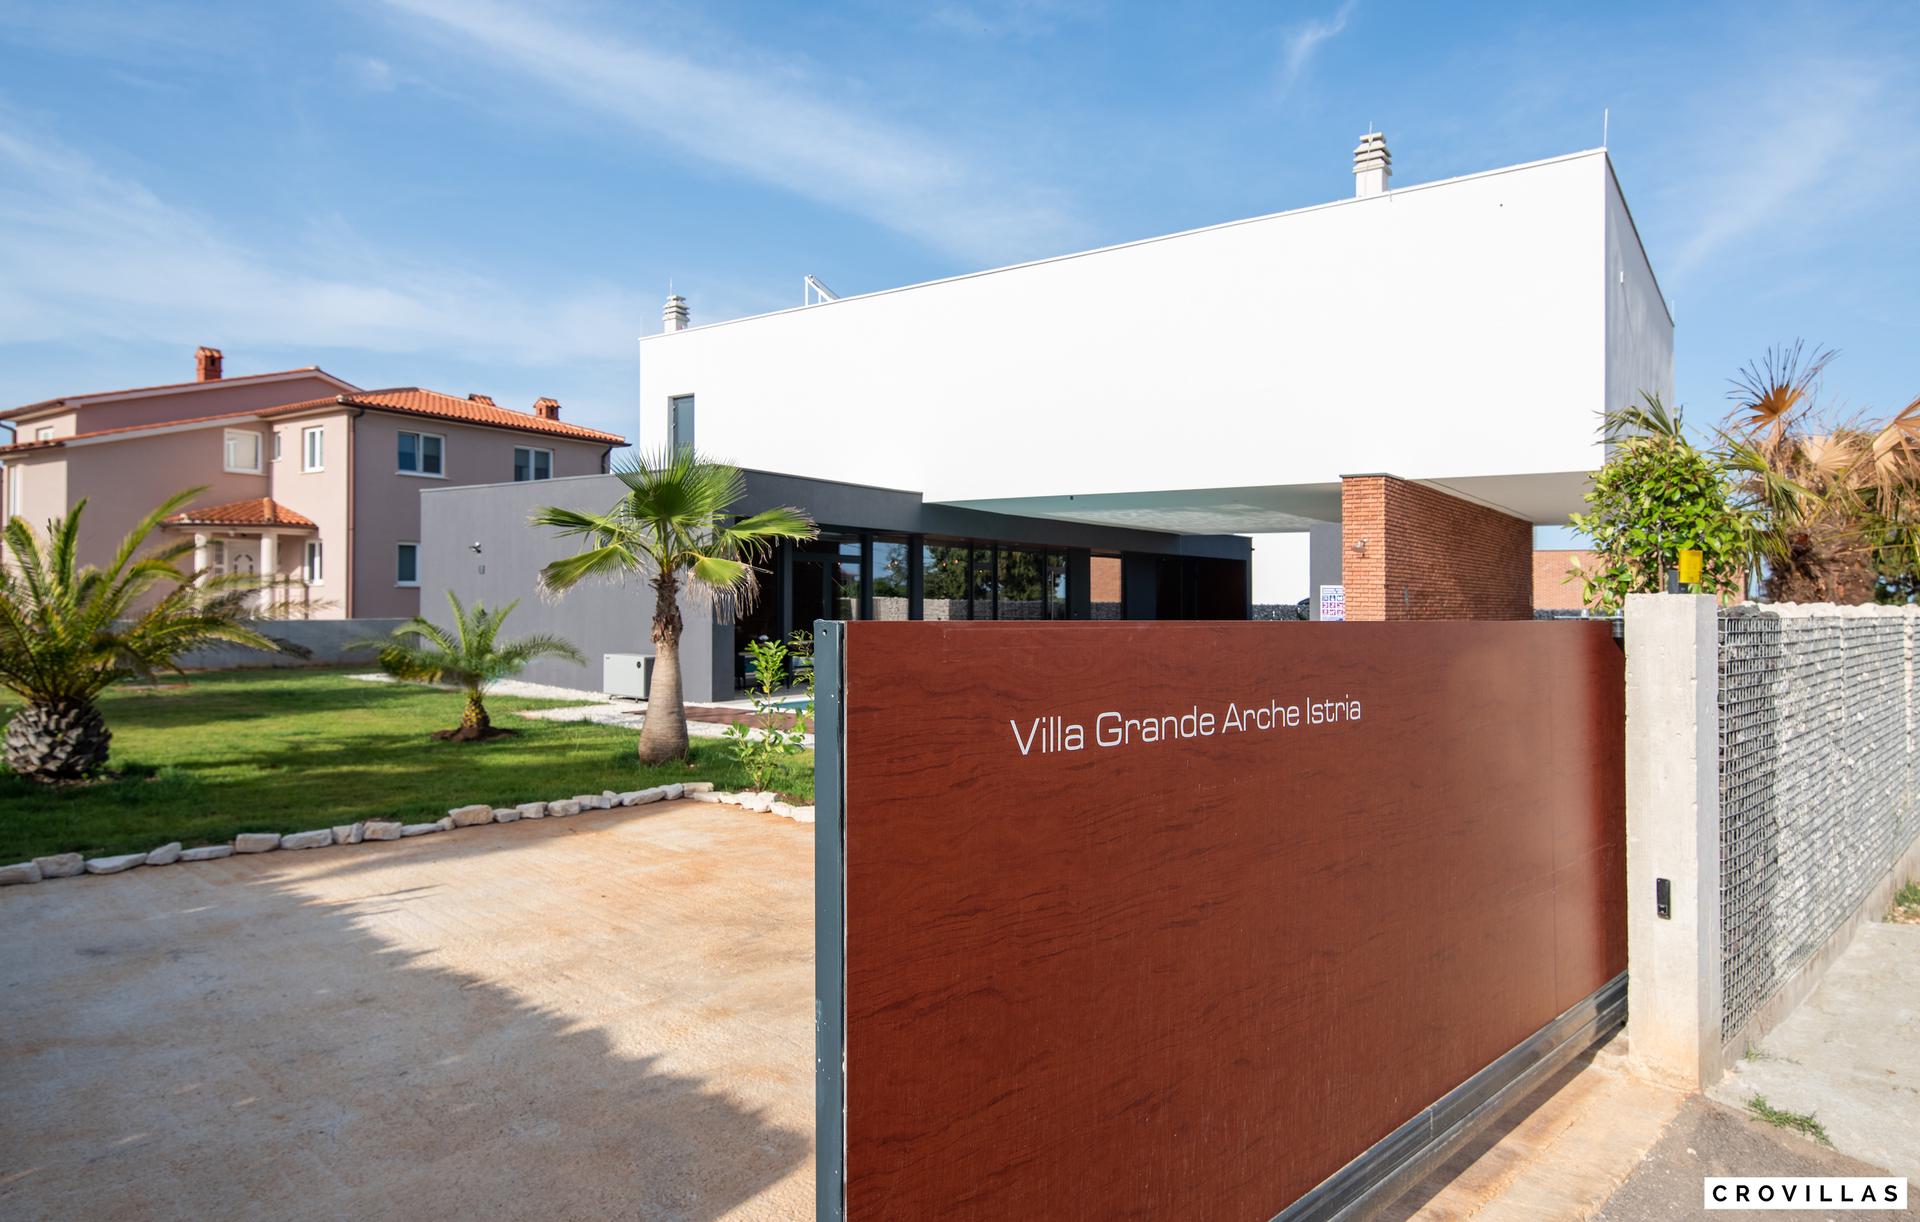 Villa Grande Arche: Highlights